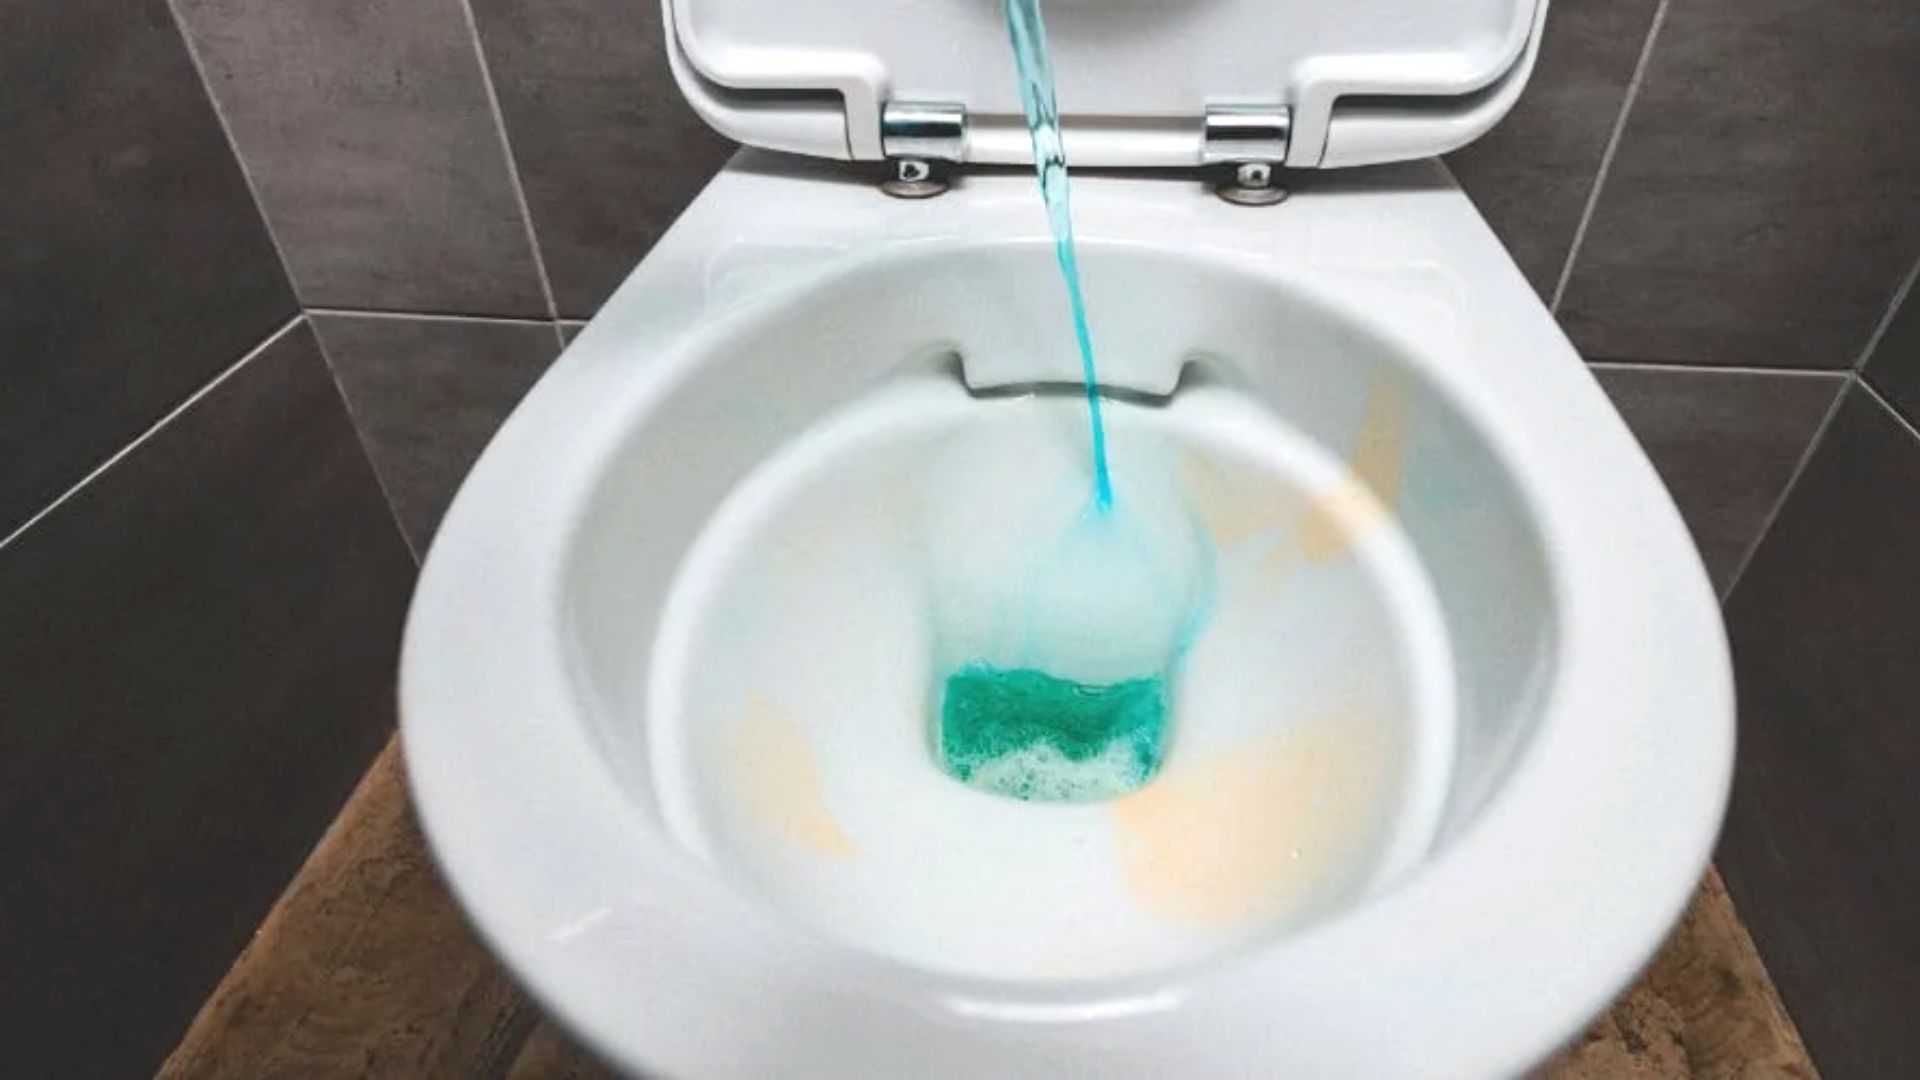 https://zeve.au/bigblue/uploads/2022/05/pouring-dish-washing-liquid-into-drain.jpg